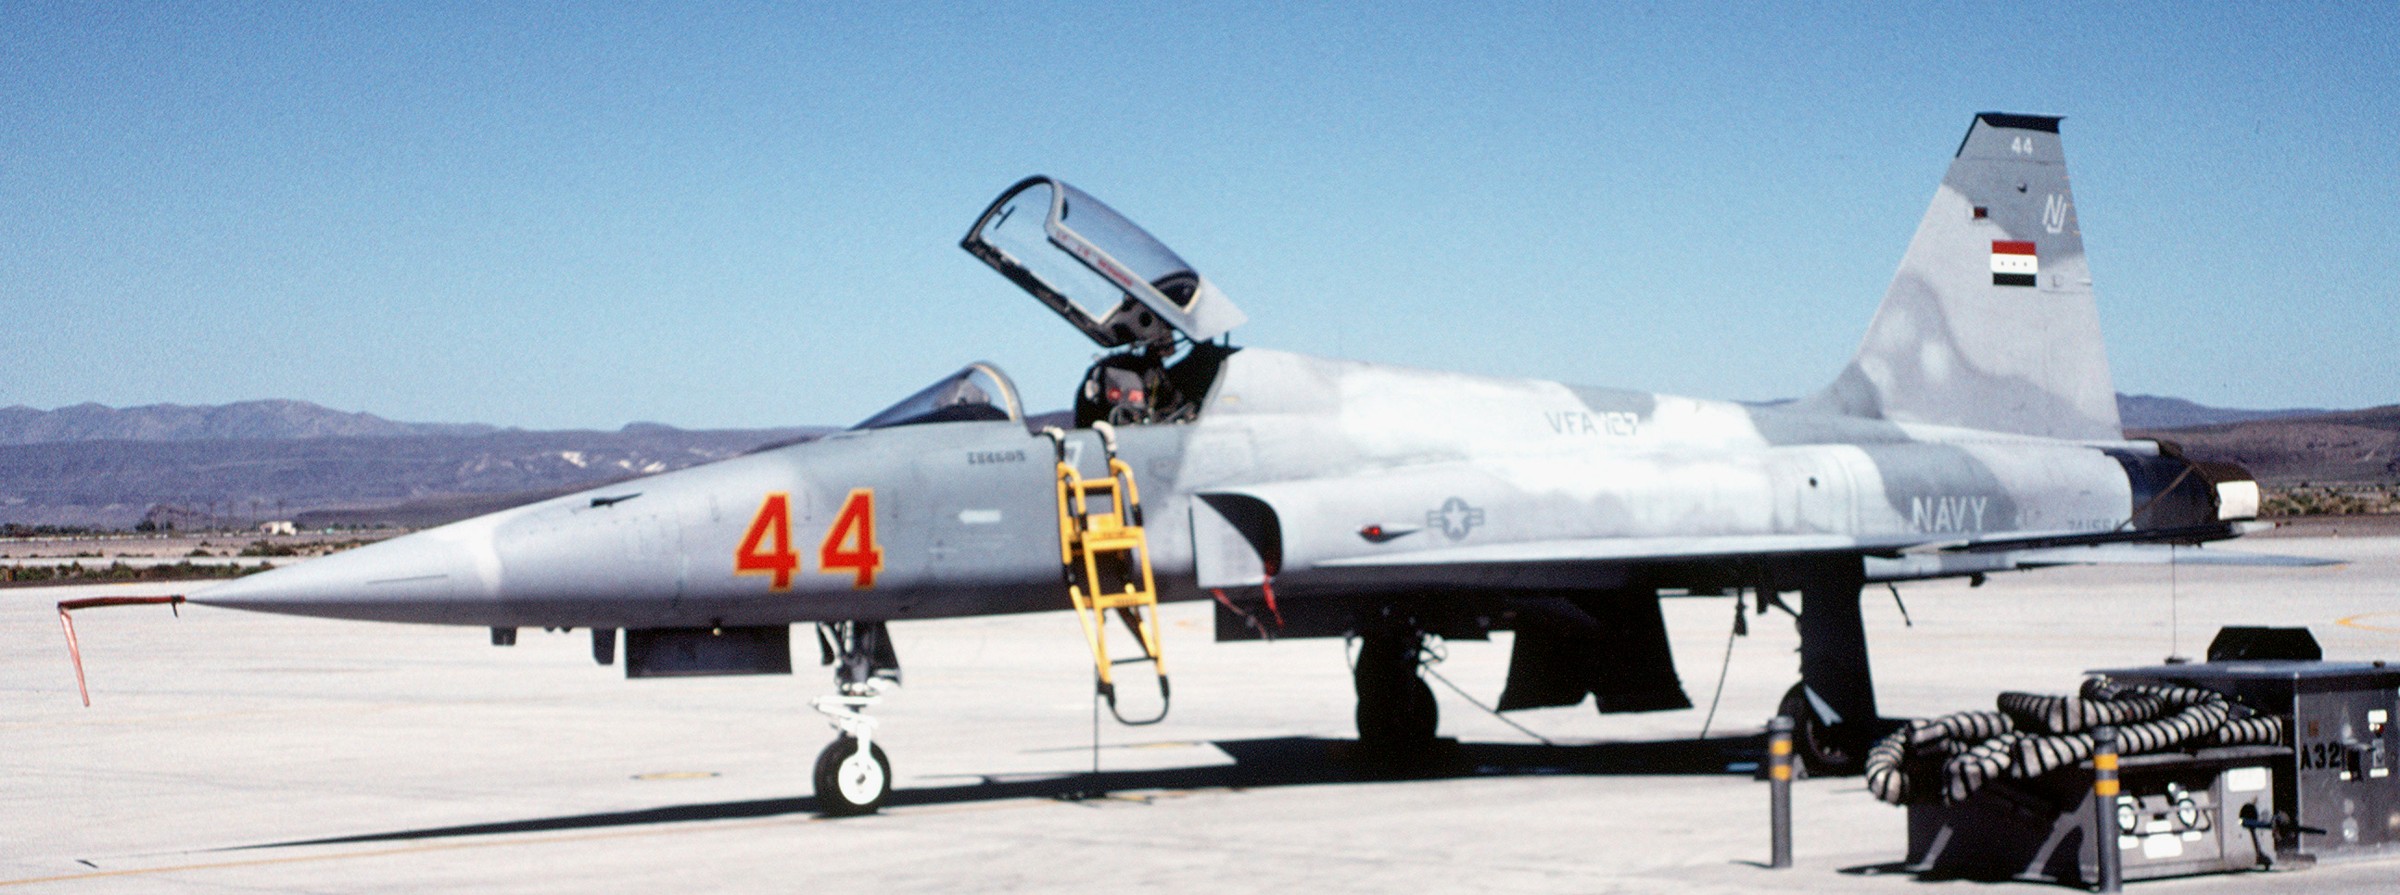 vfa-127 desert bogeys strike fighter squadron f-5e tiger 1993 16